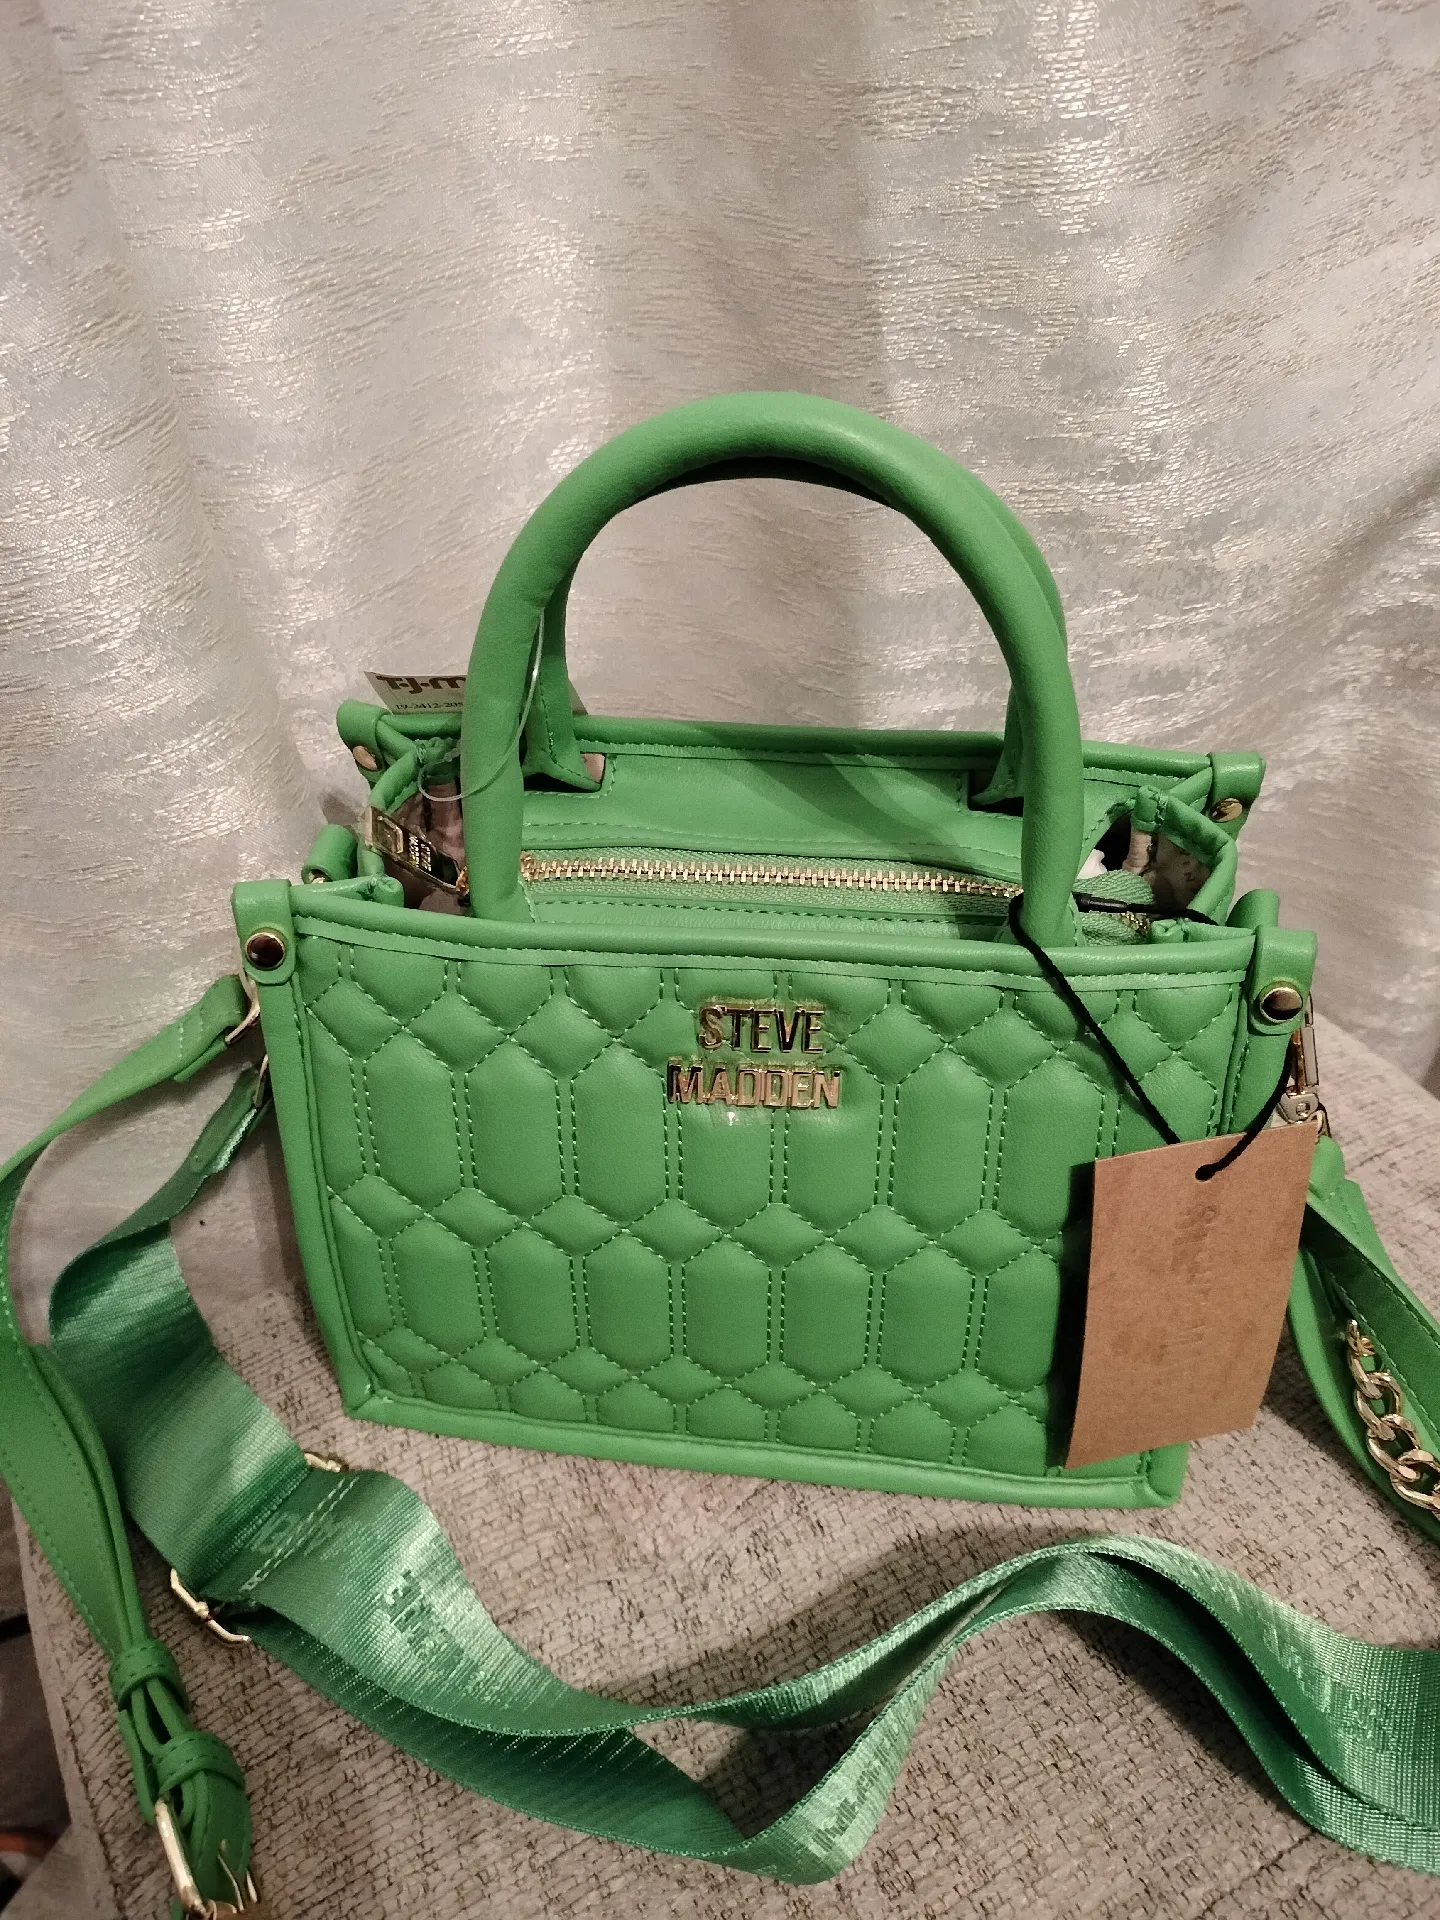 TJMaxx haul : r/handbags